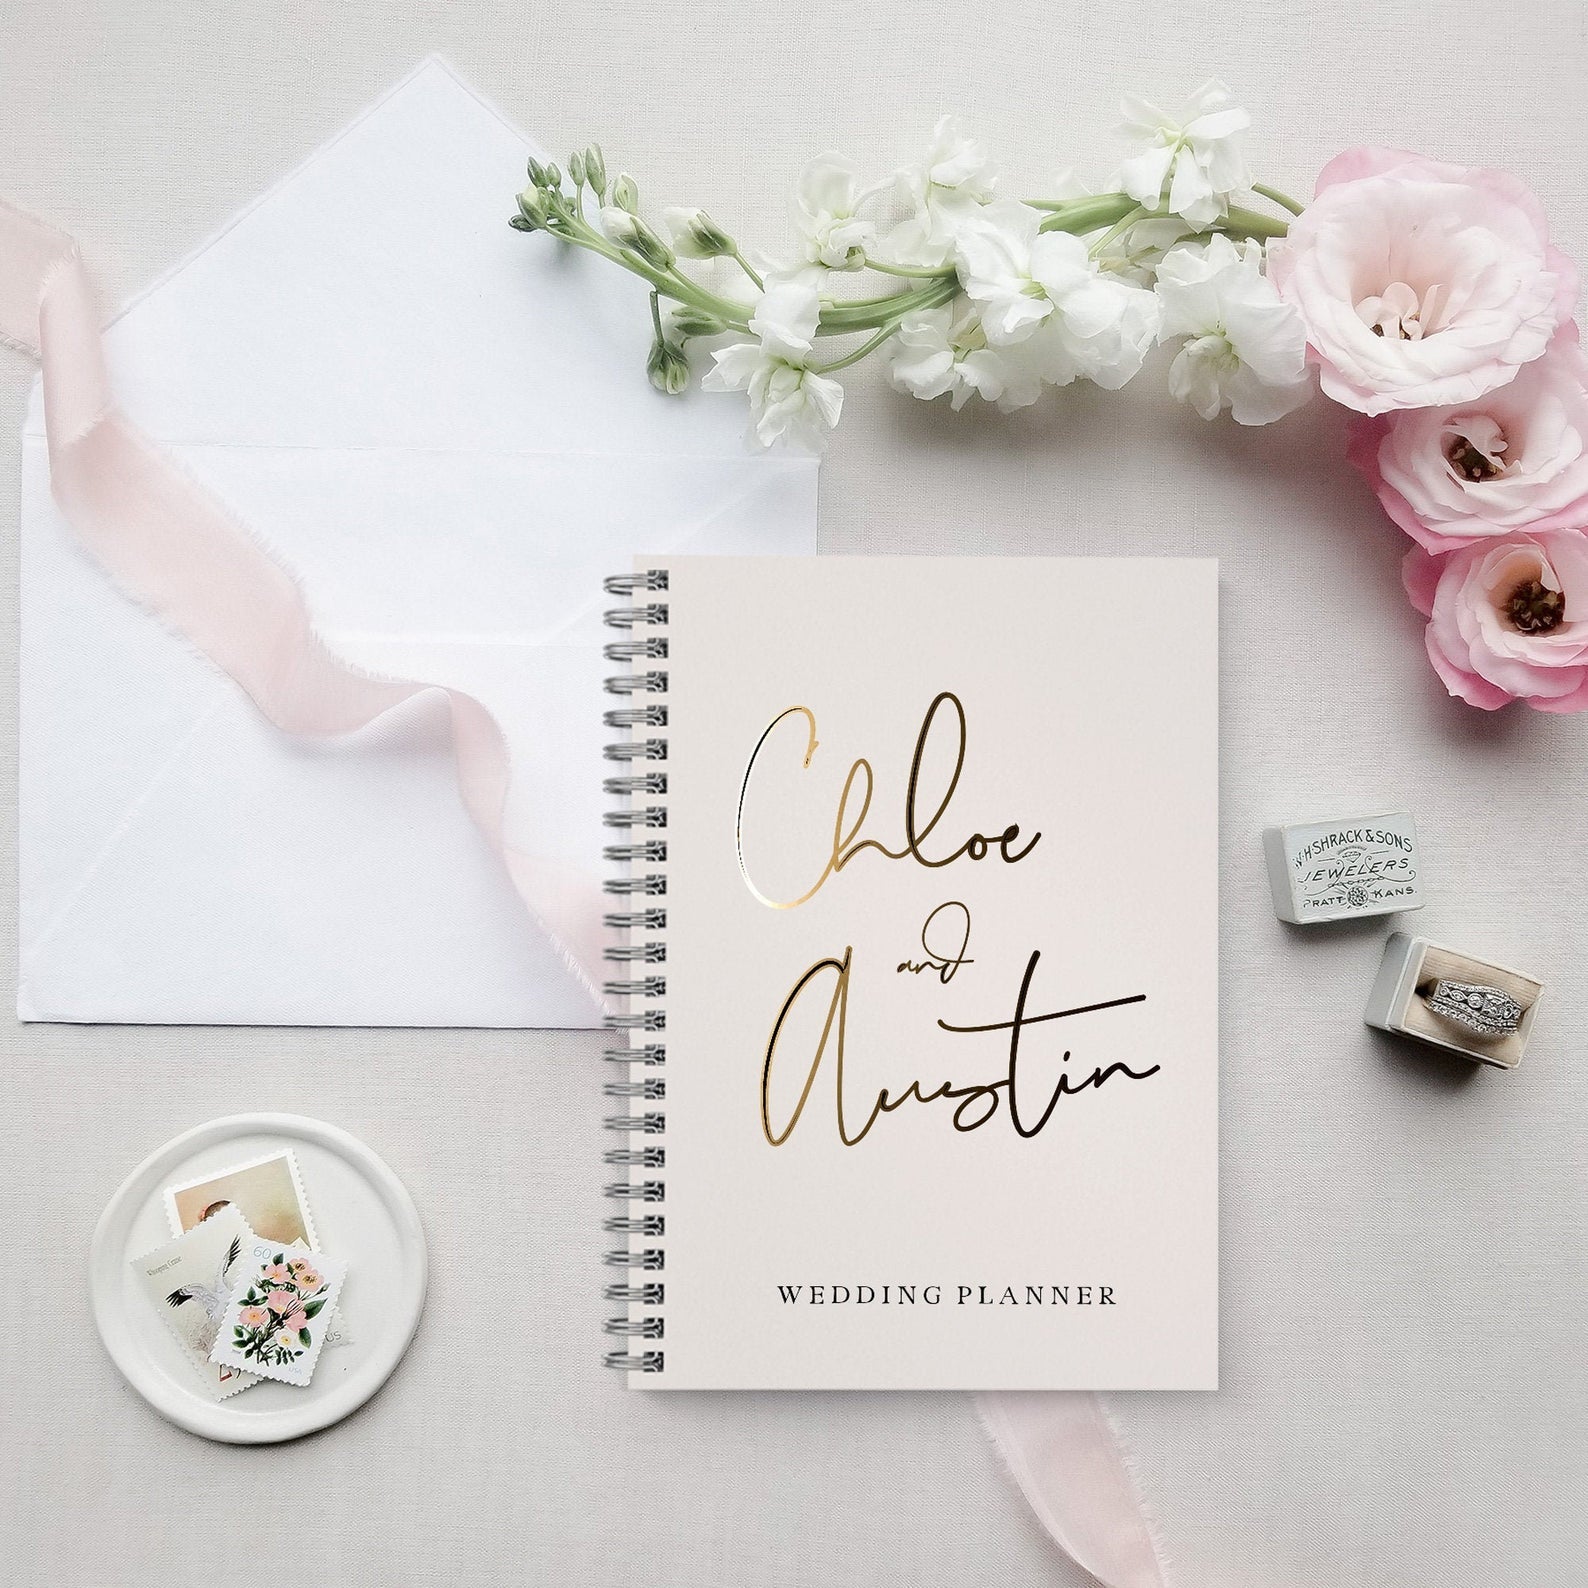 Personalized Blush Wedding Planner - Custom Hardcover Wedding Planner Book